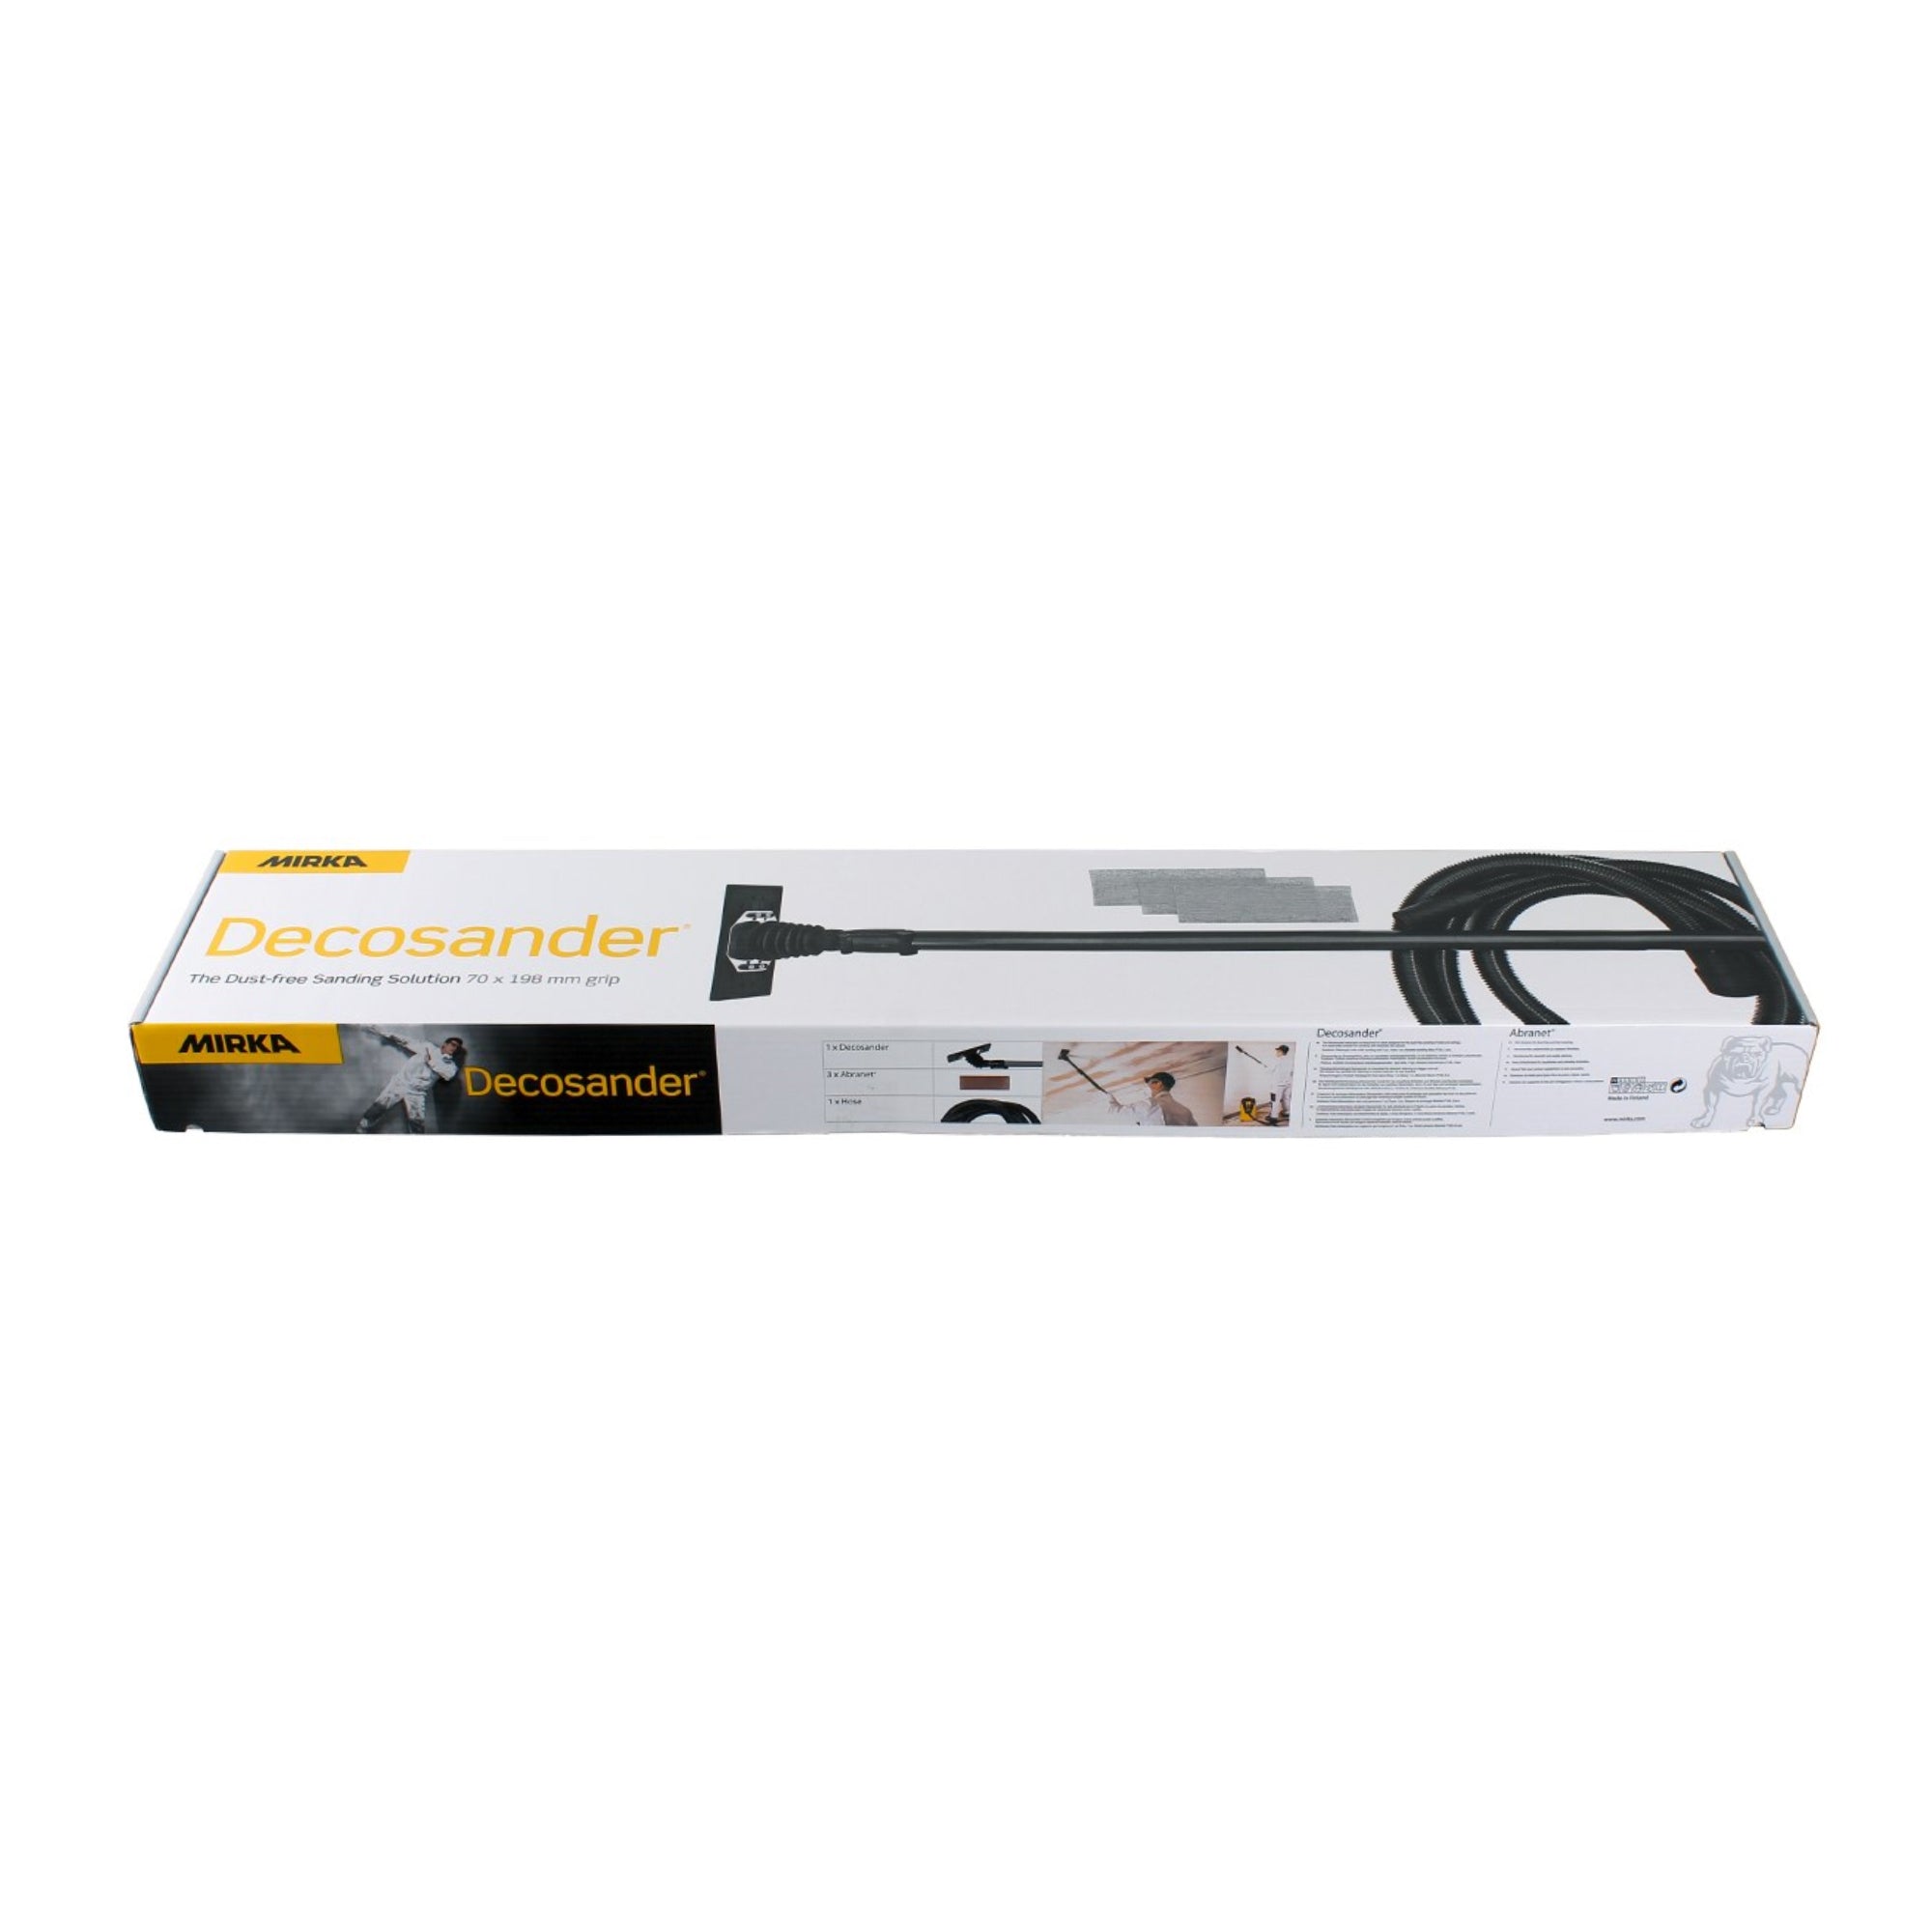 Mirka DECO 2.75"x 8" 113H Grip Sander Tool con kit de poste telescópico (MIR-9300)